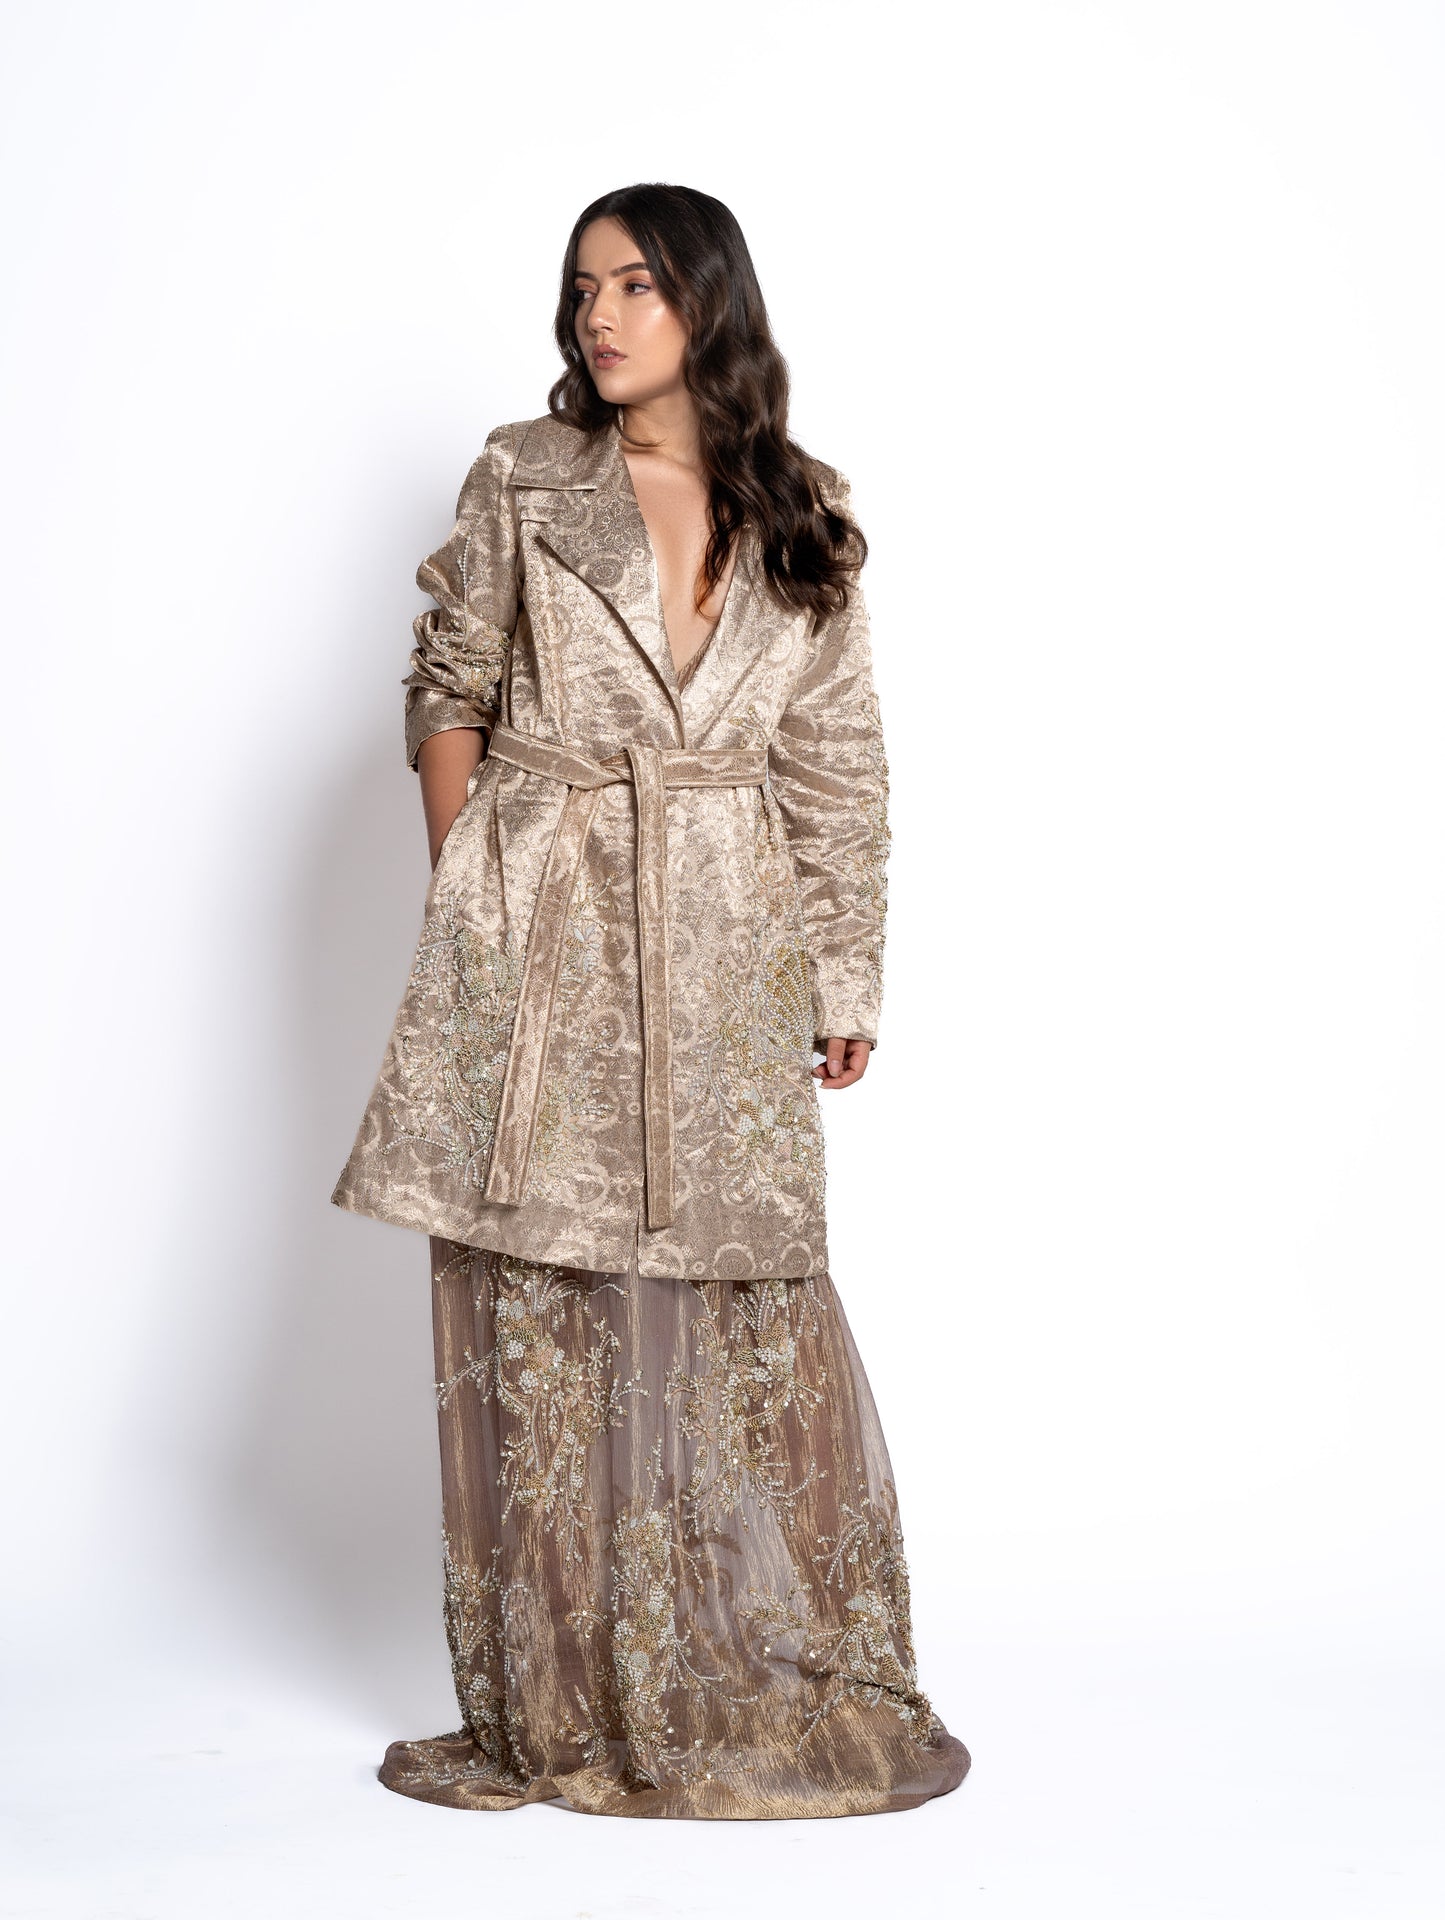 A Metallic crush flowy dress (GS2048)